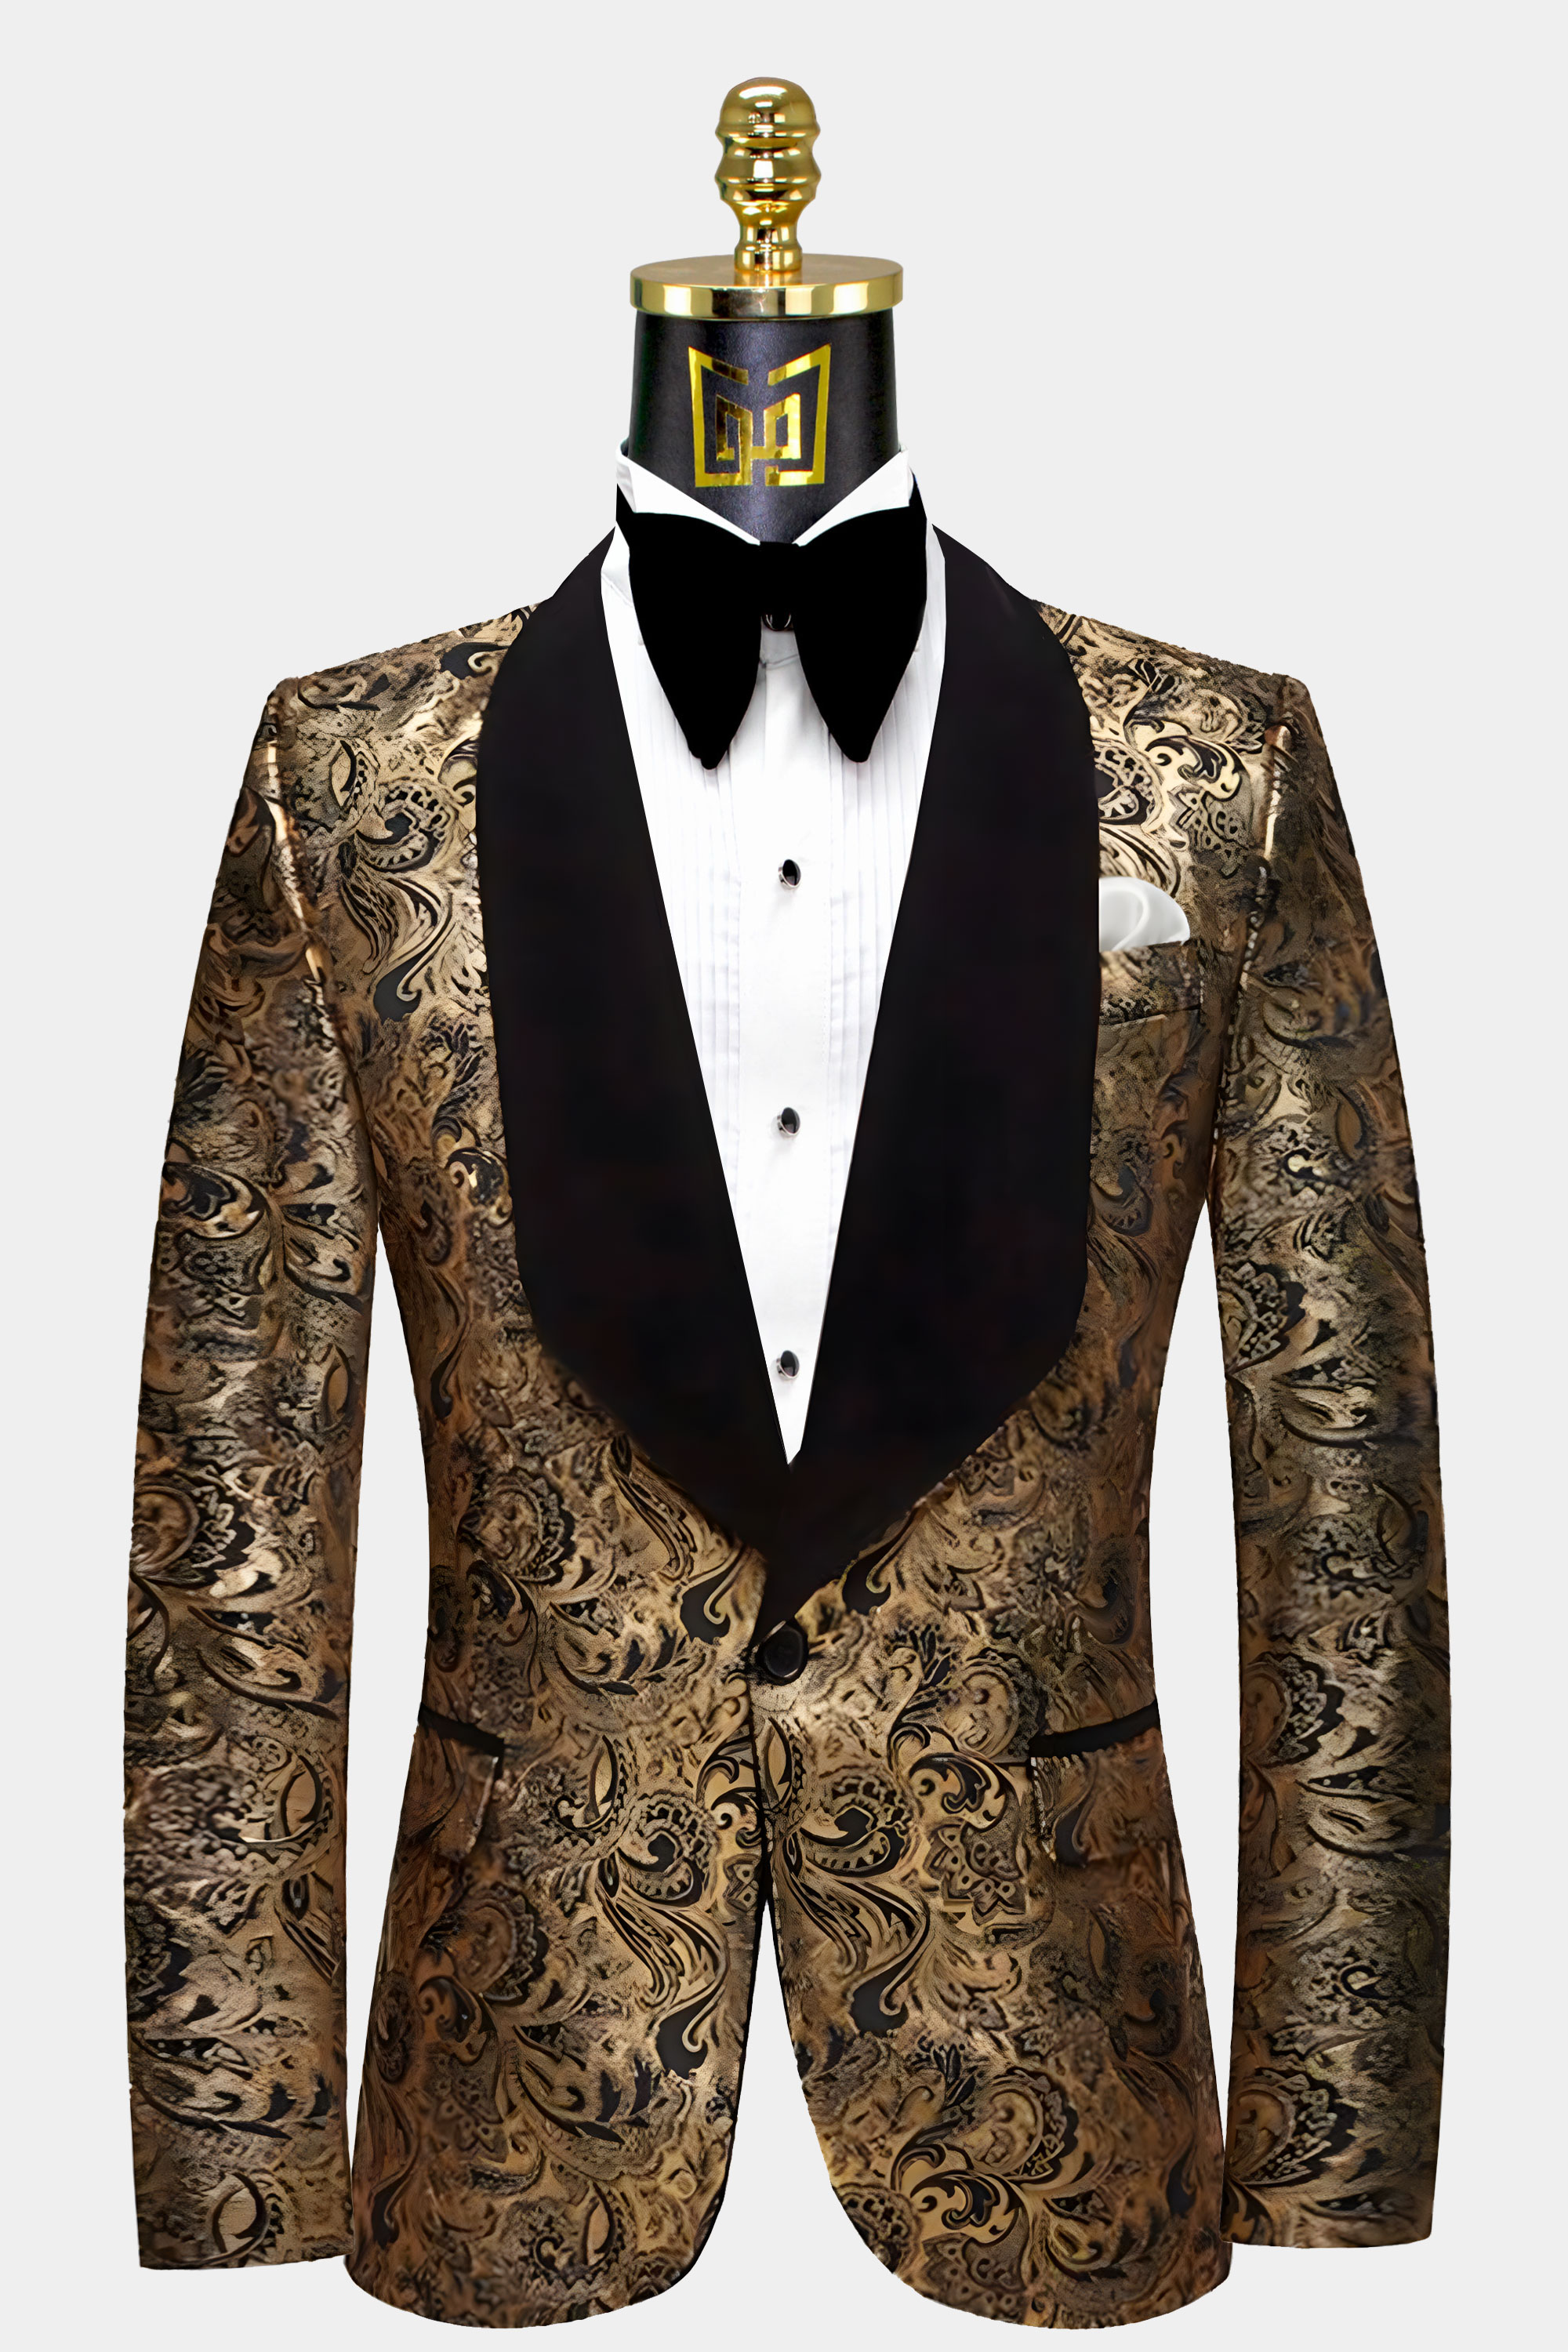 Black Gold Tuxedo Jacket | ppgbbe.intranet.biologia.ufrj.br